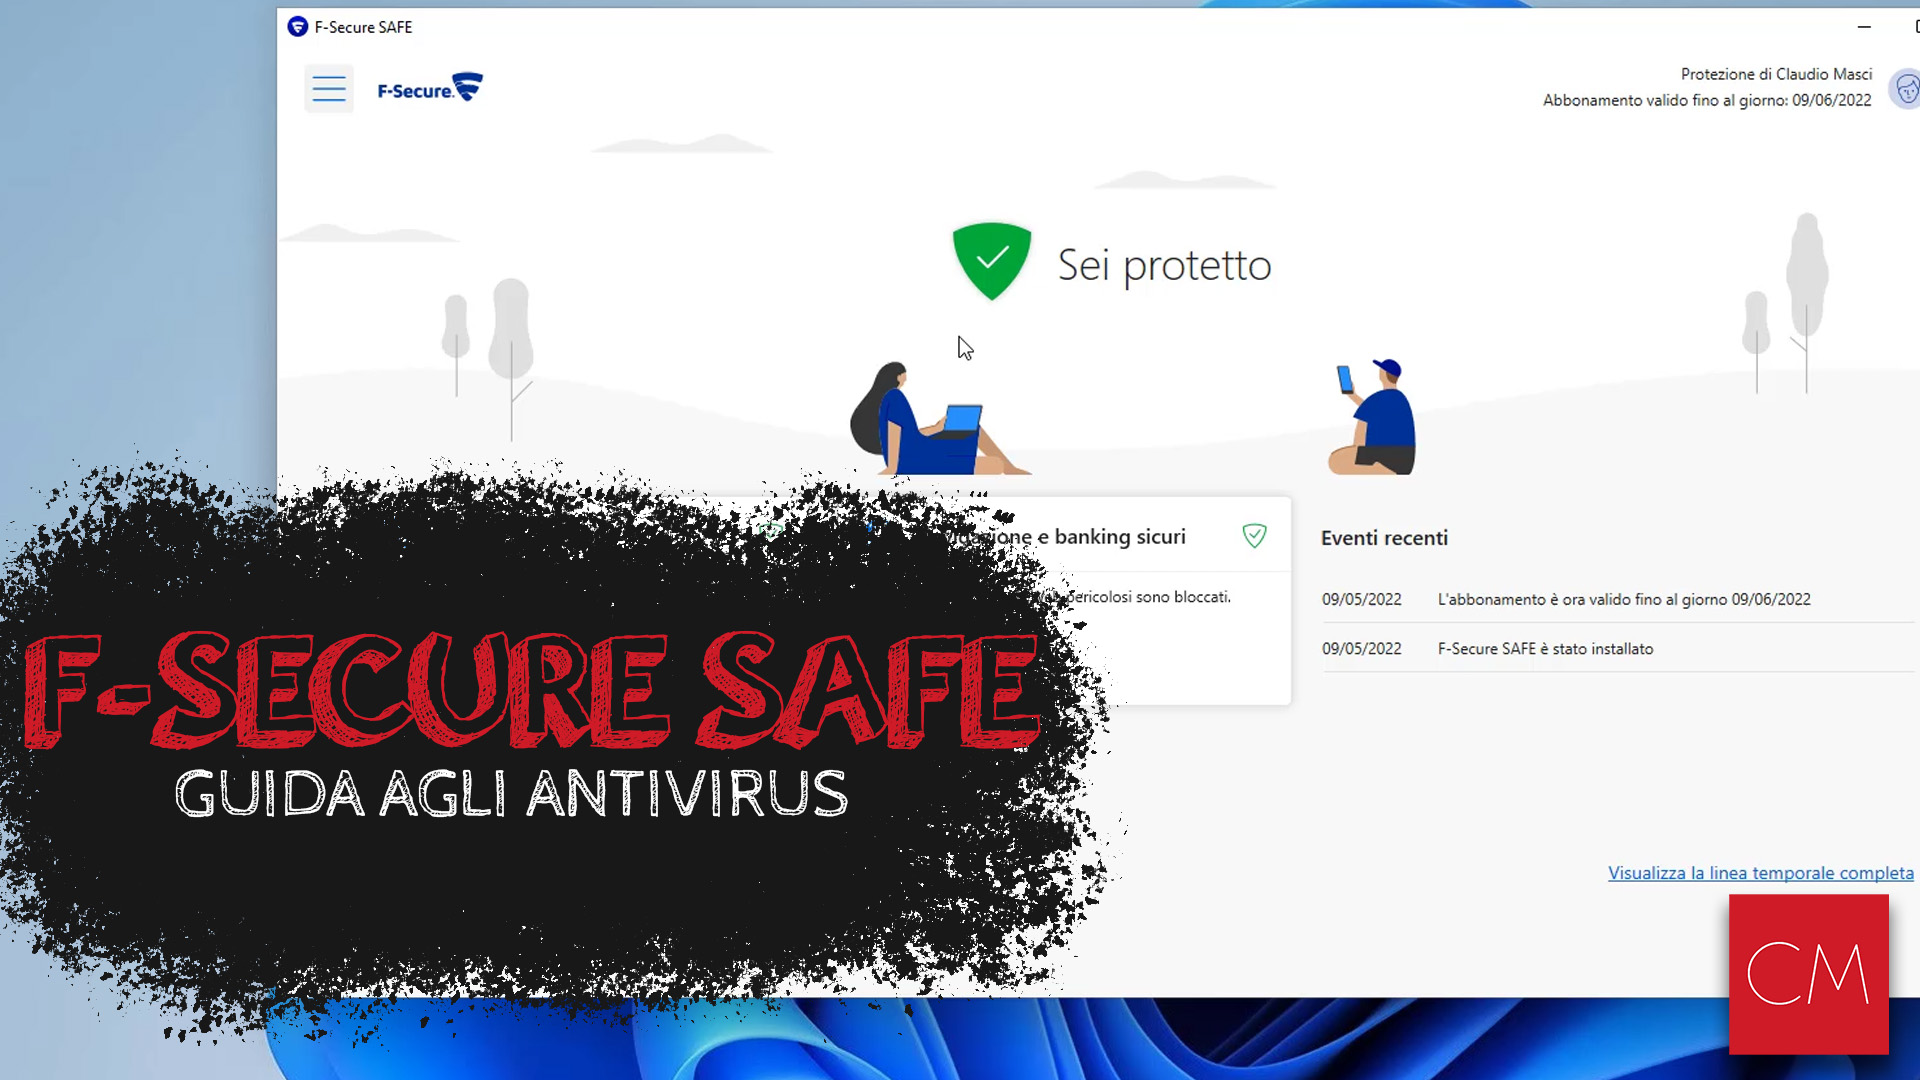 Guida agli antivirus - f-secure safe